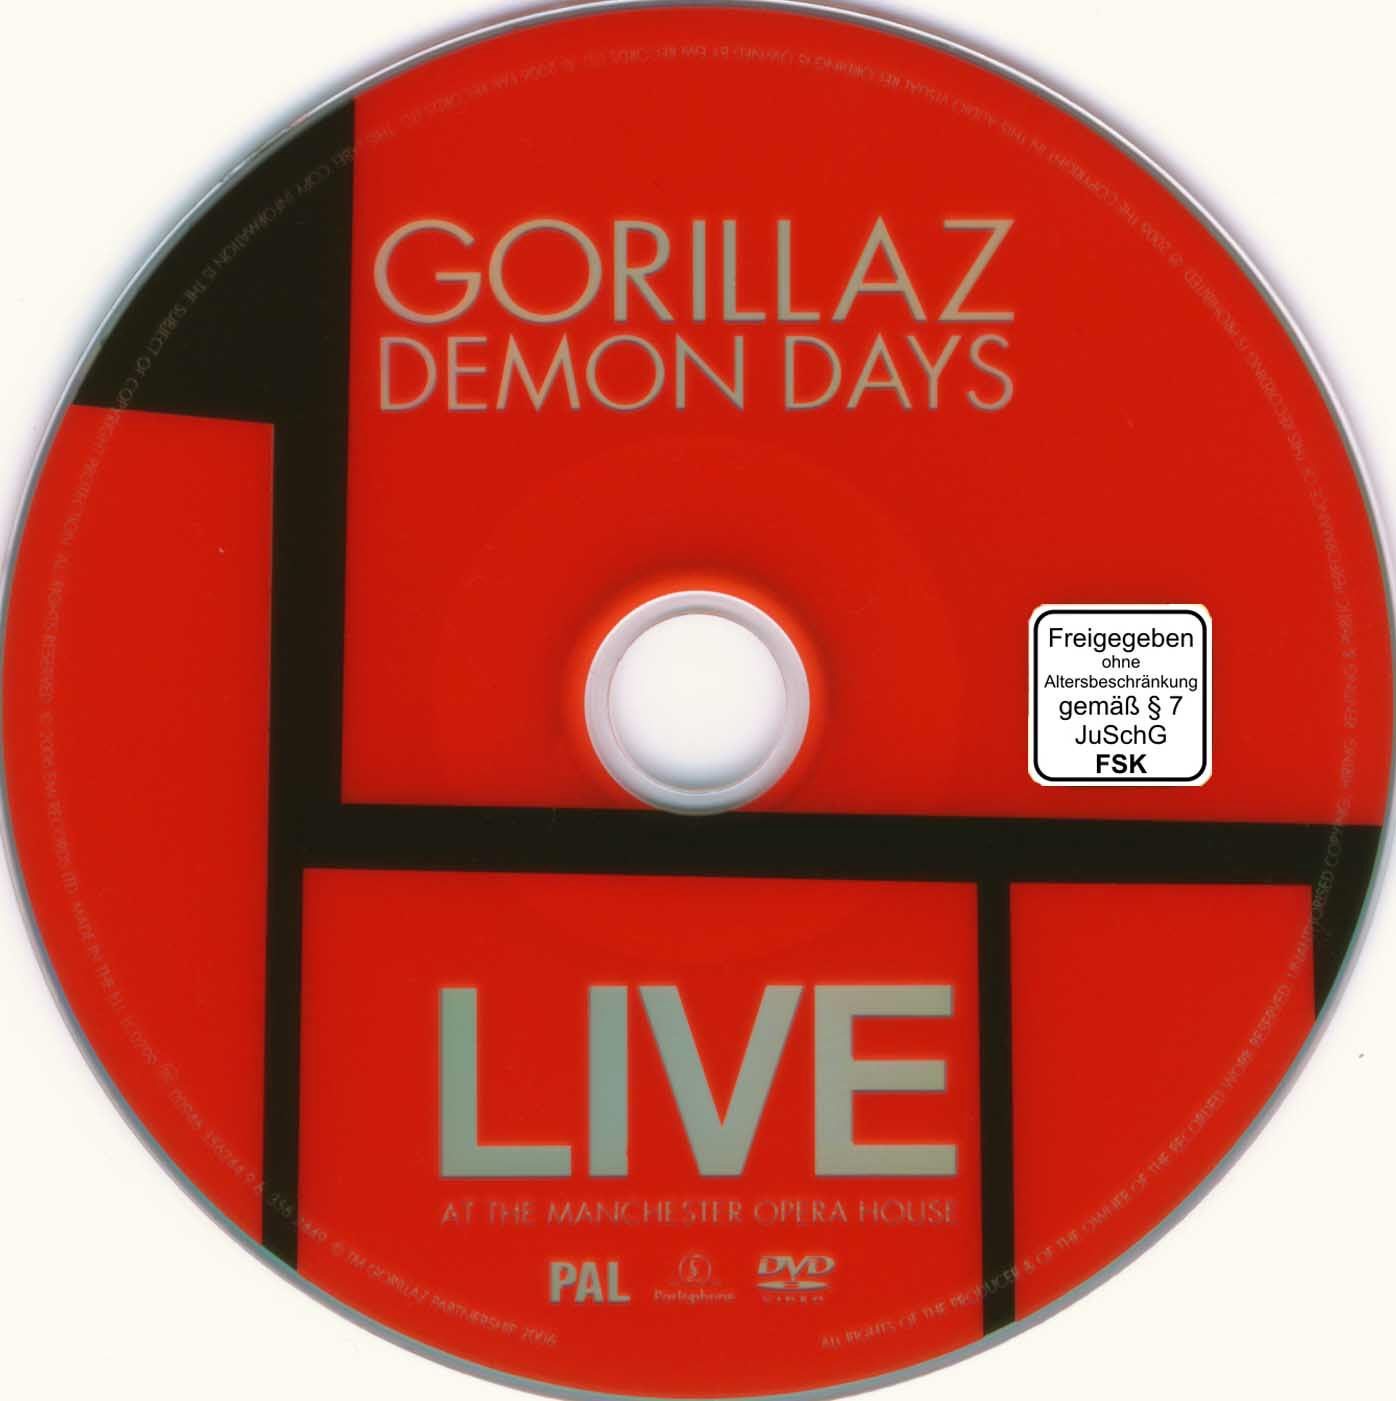 russell hobbs gorillaz demon days album cover